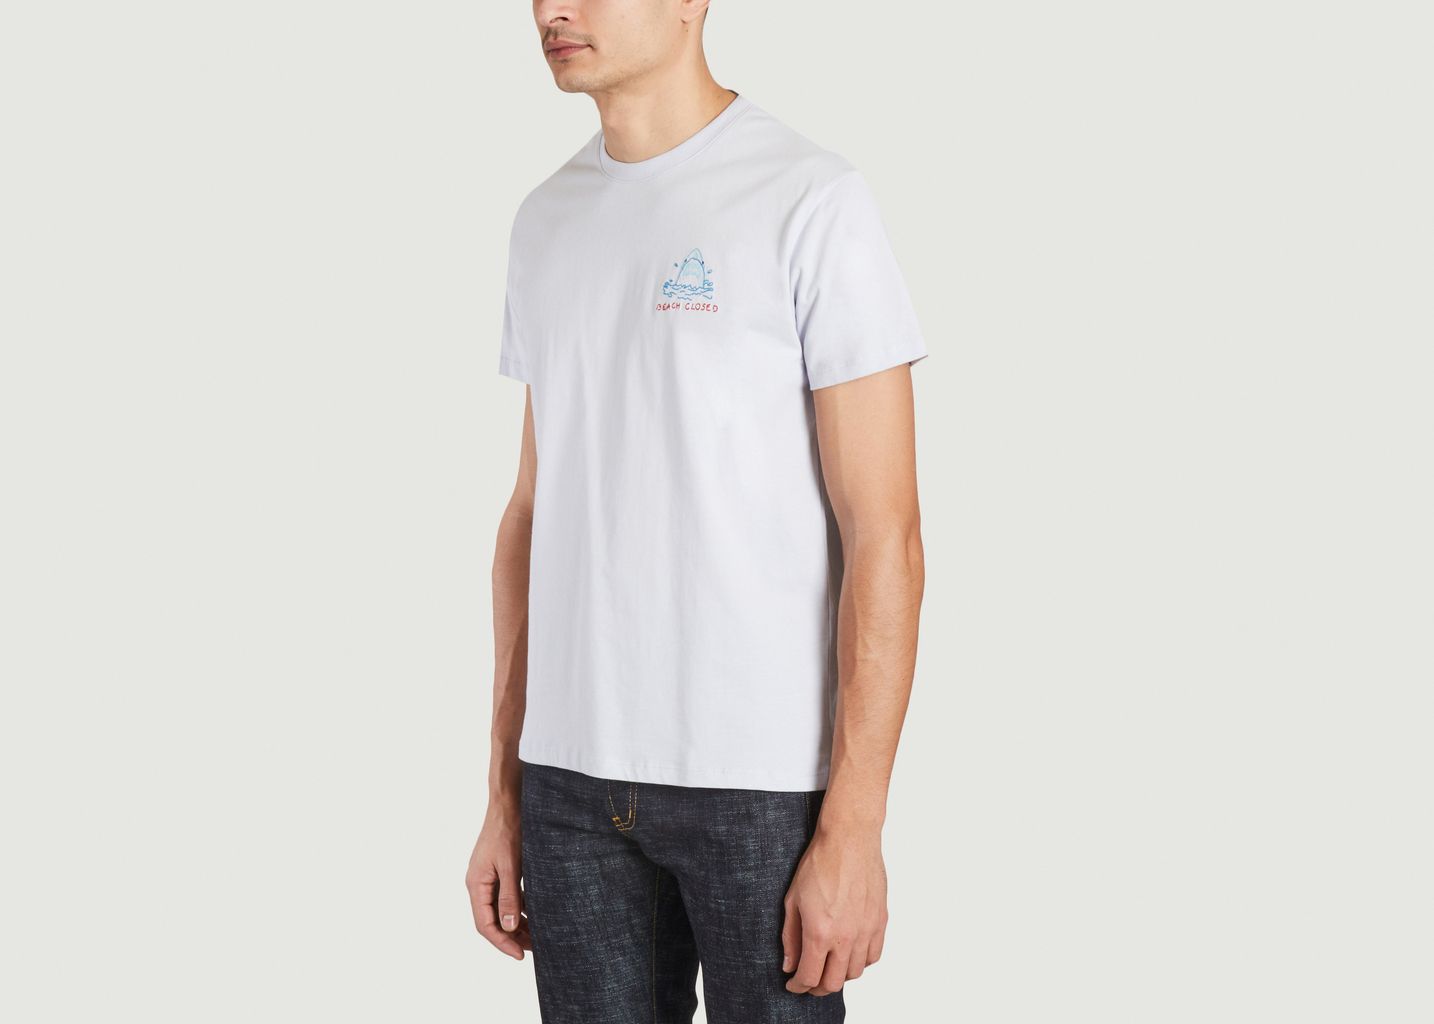 Popincourt T-shirt - Maison Labiche